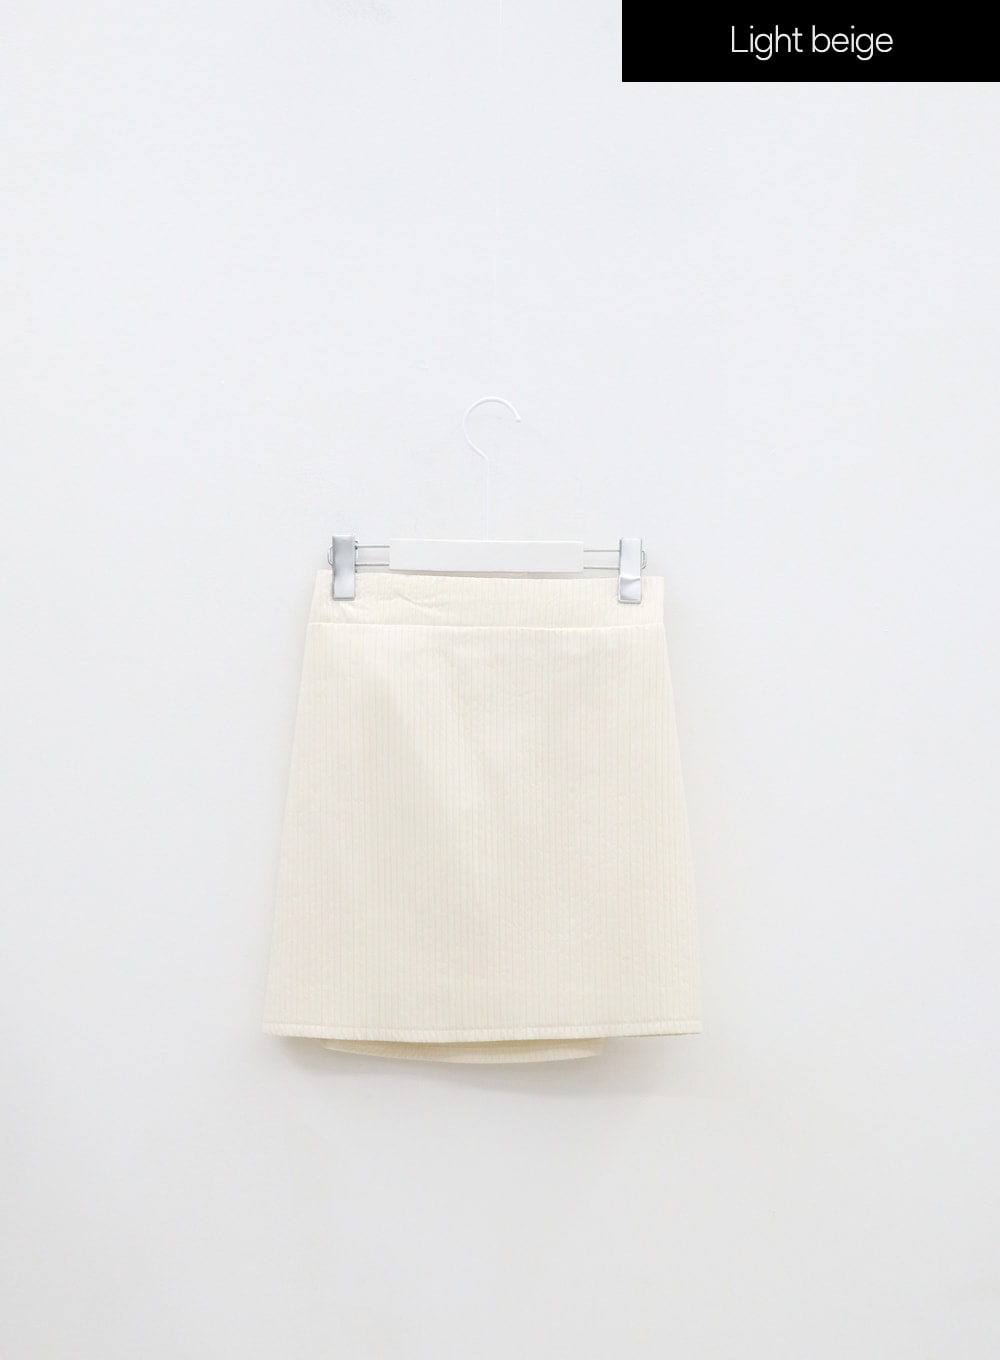 High Waist Mini Skirt IM315